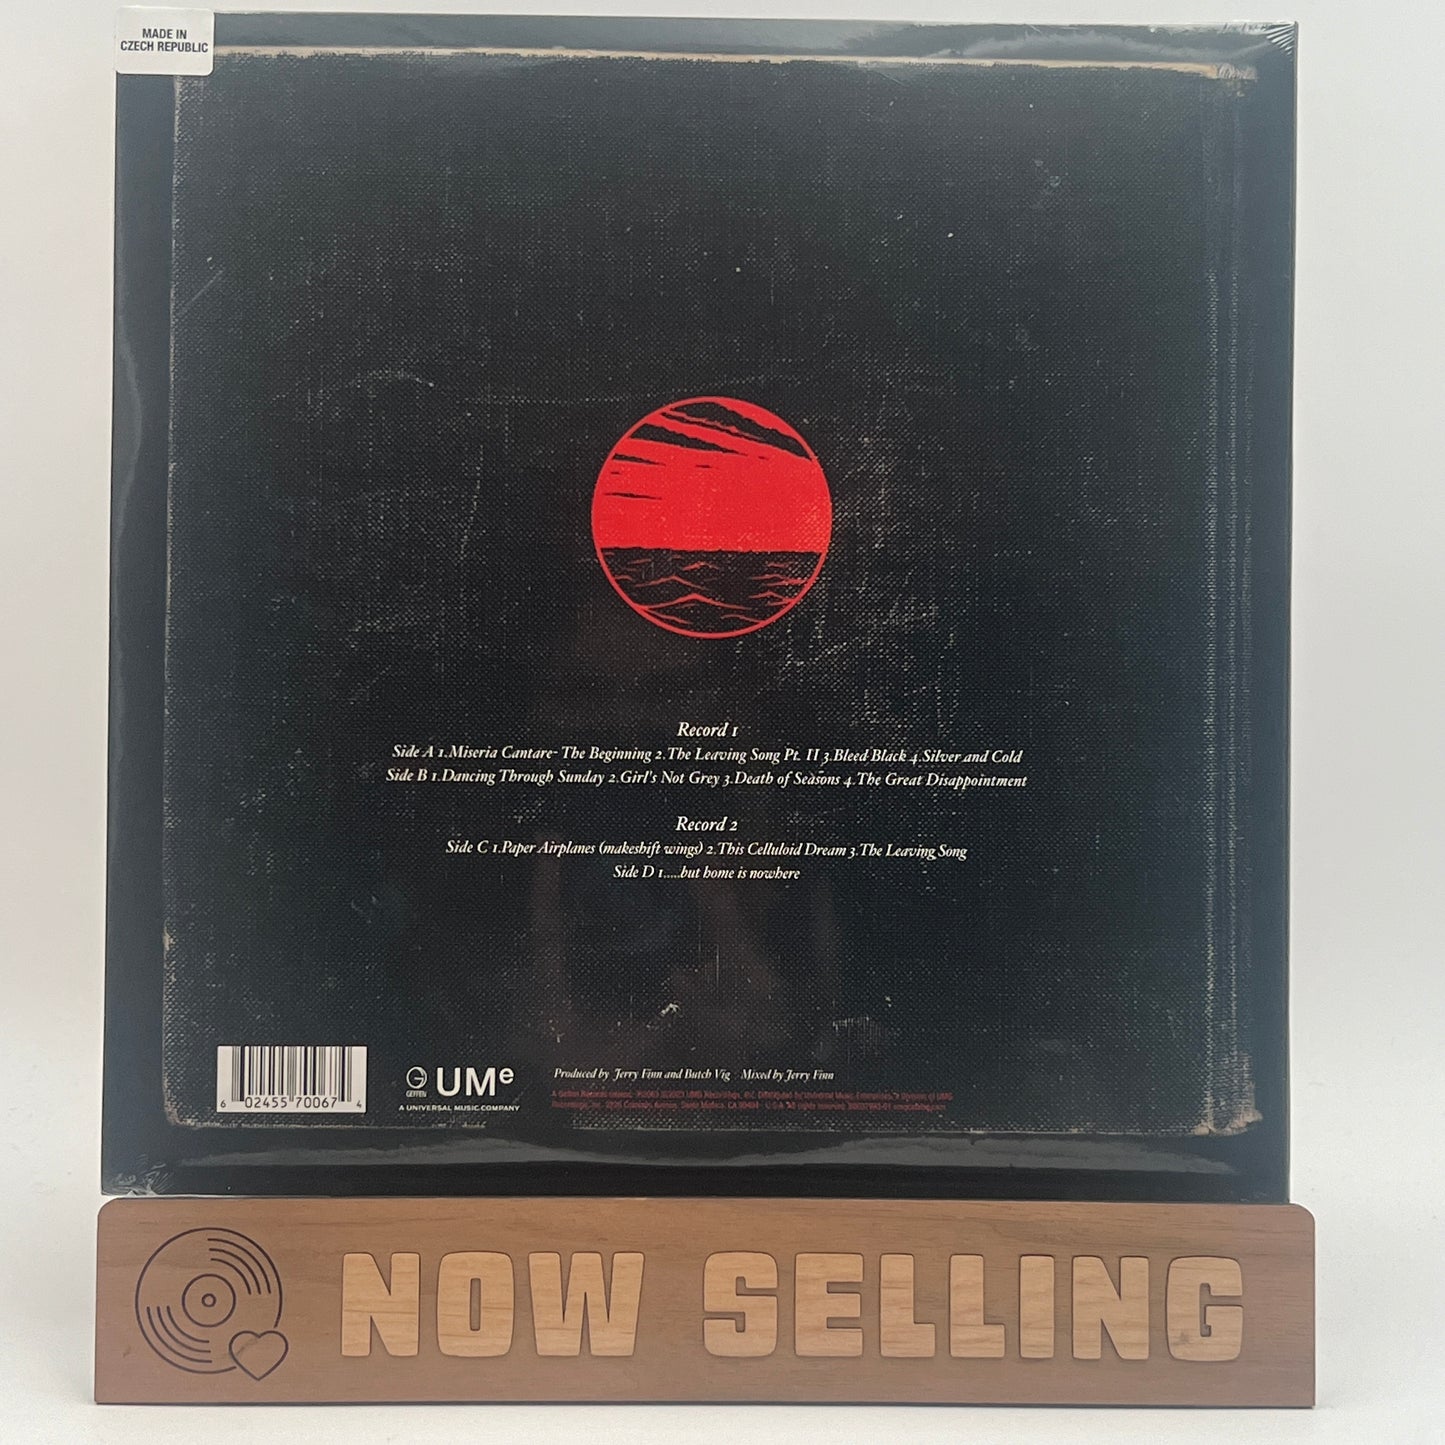 AFI - Sing the Sorrow Vinyl LP Black & Red Pinwheel Splatter Reissue SEALED